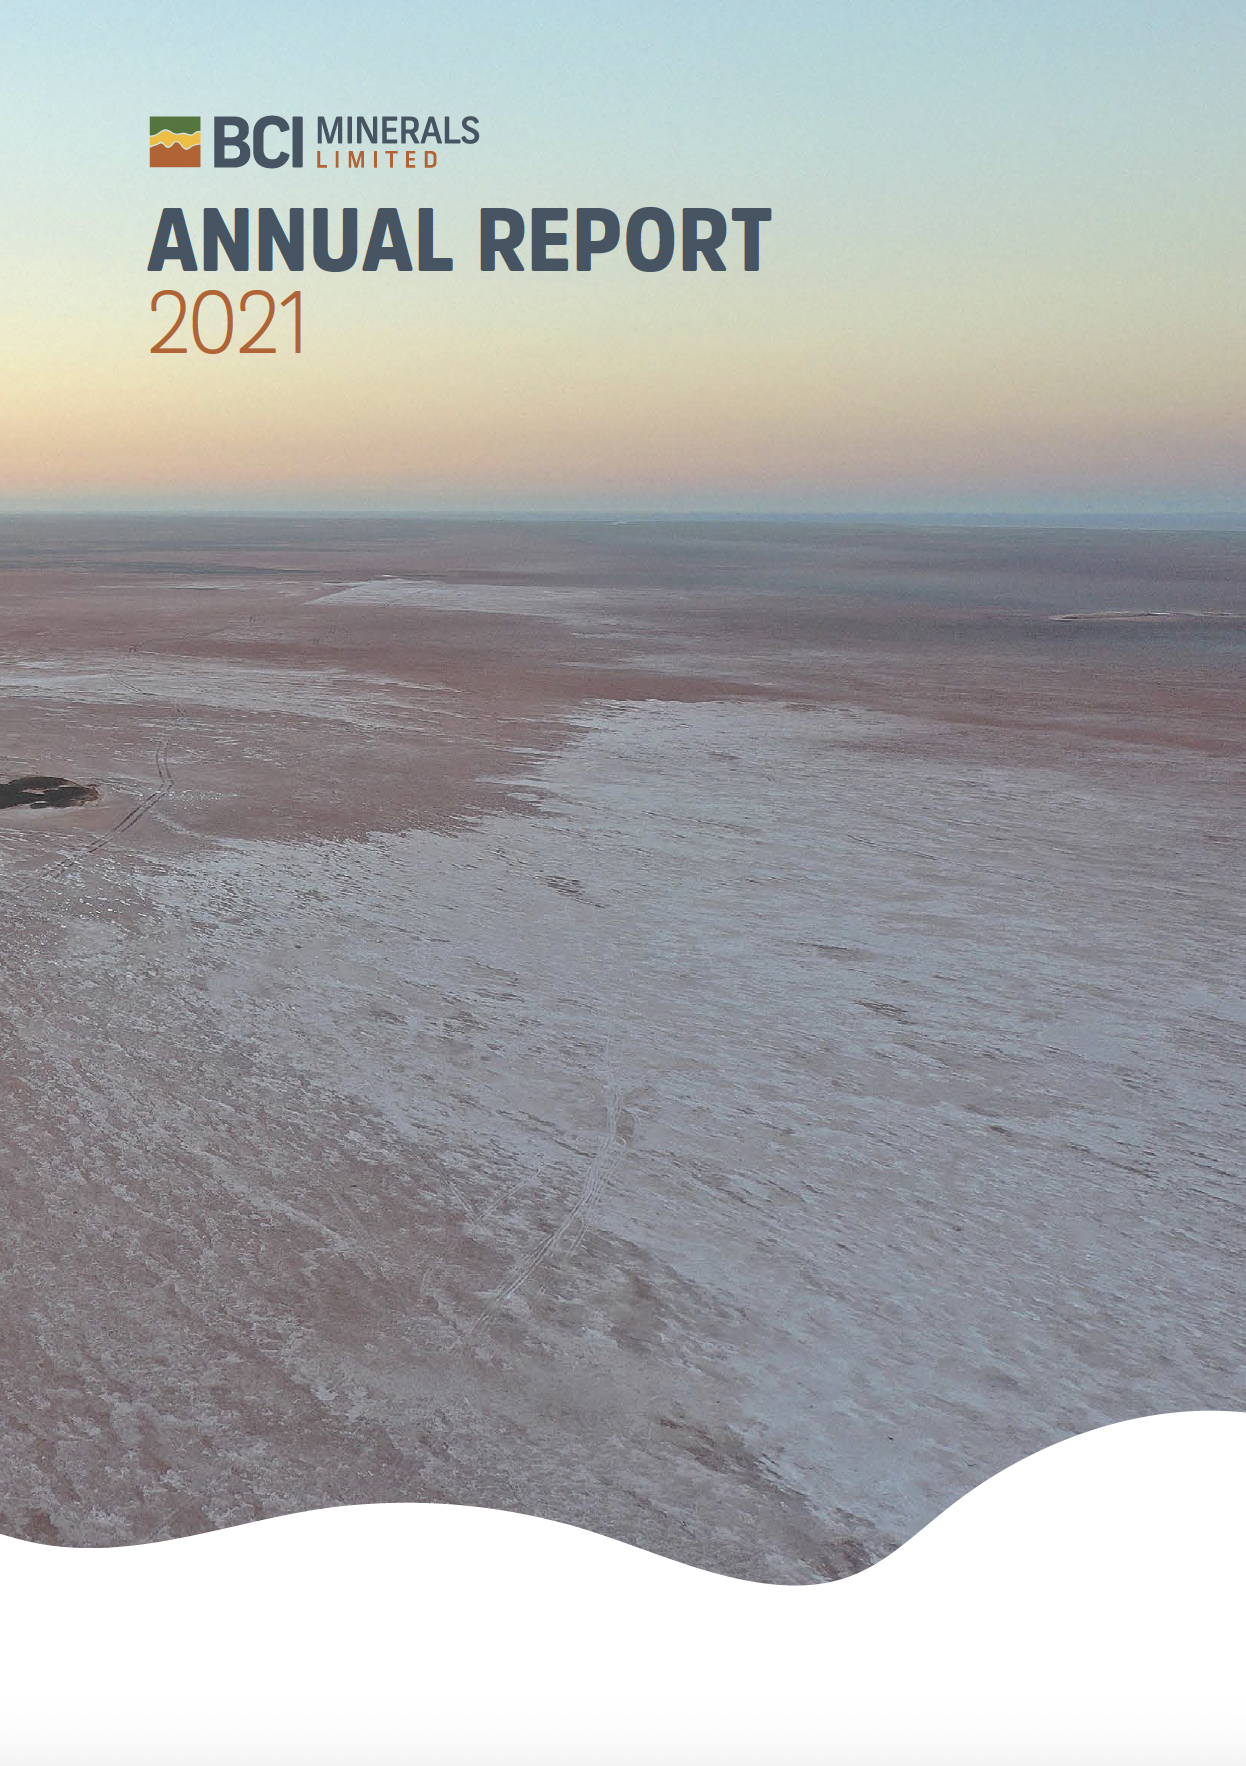 annual report 2020